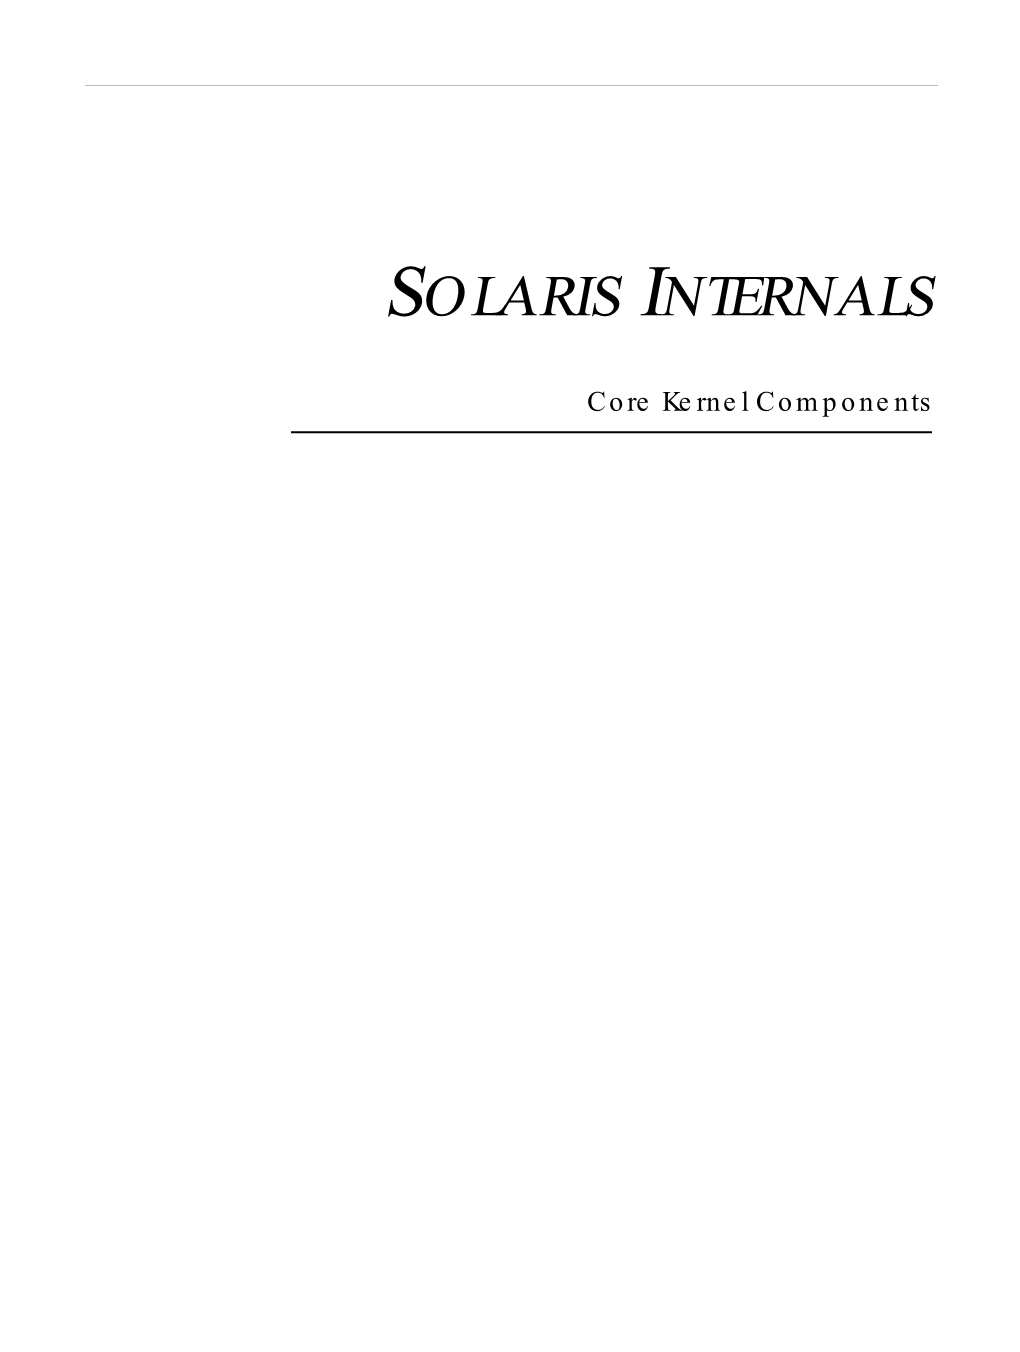 Solaris Internals